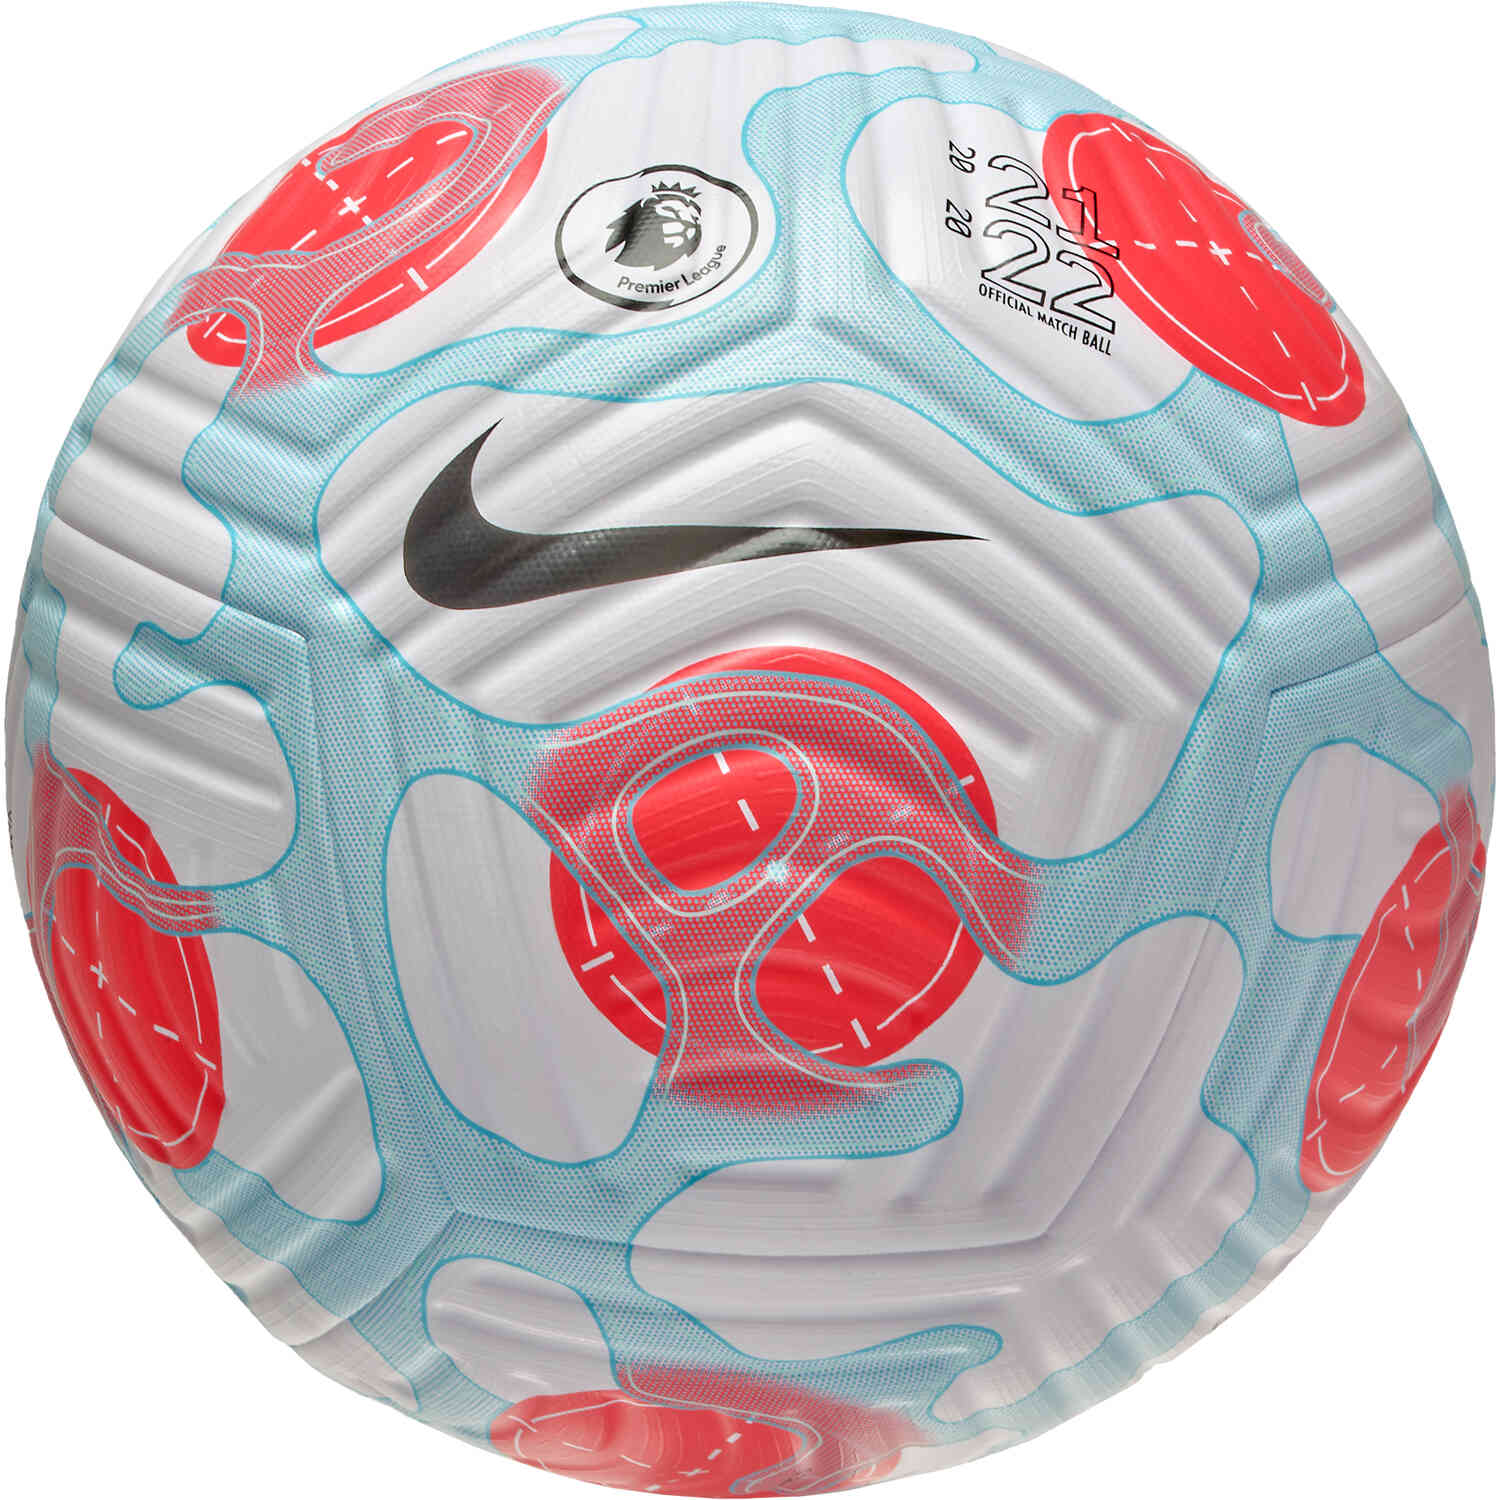 NIKE Nike PREMIER LEAGUE STRIKE - Ballon football white/black/orange -  Private Sport Shop